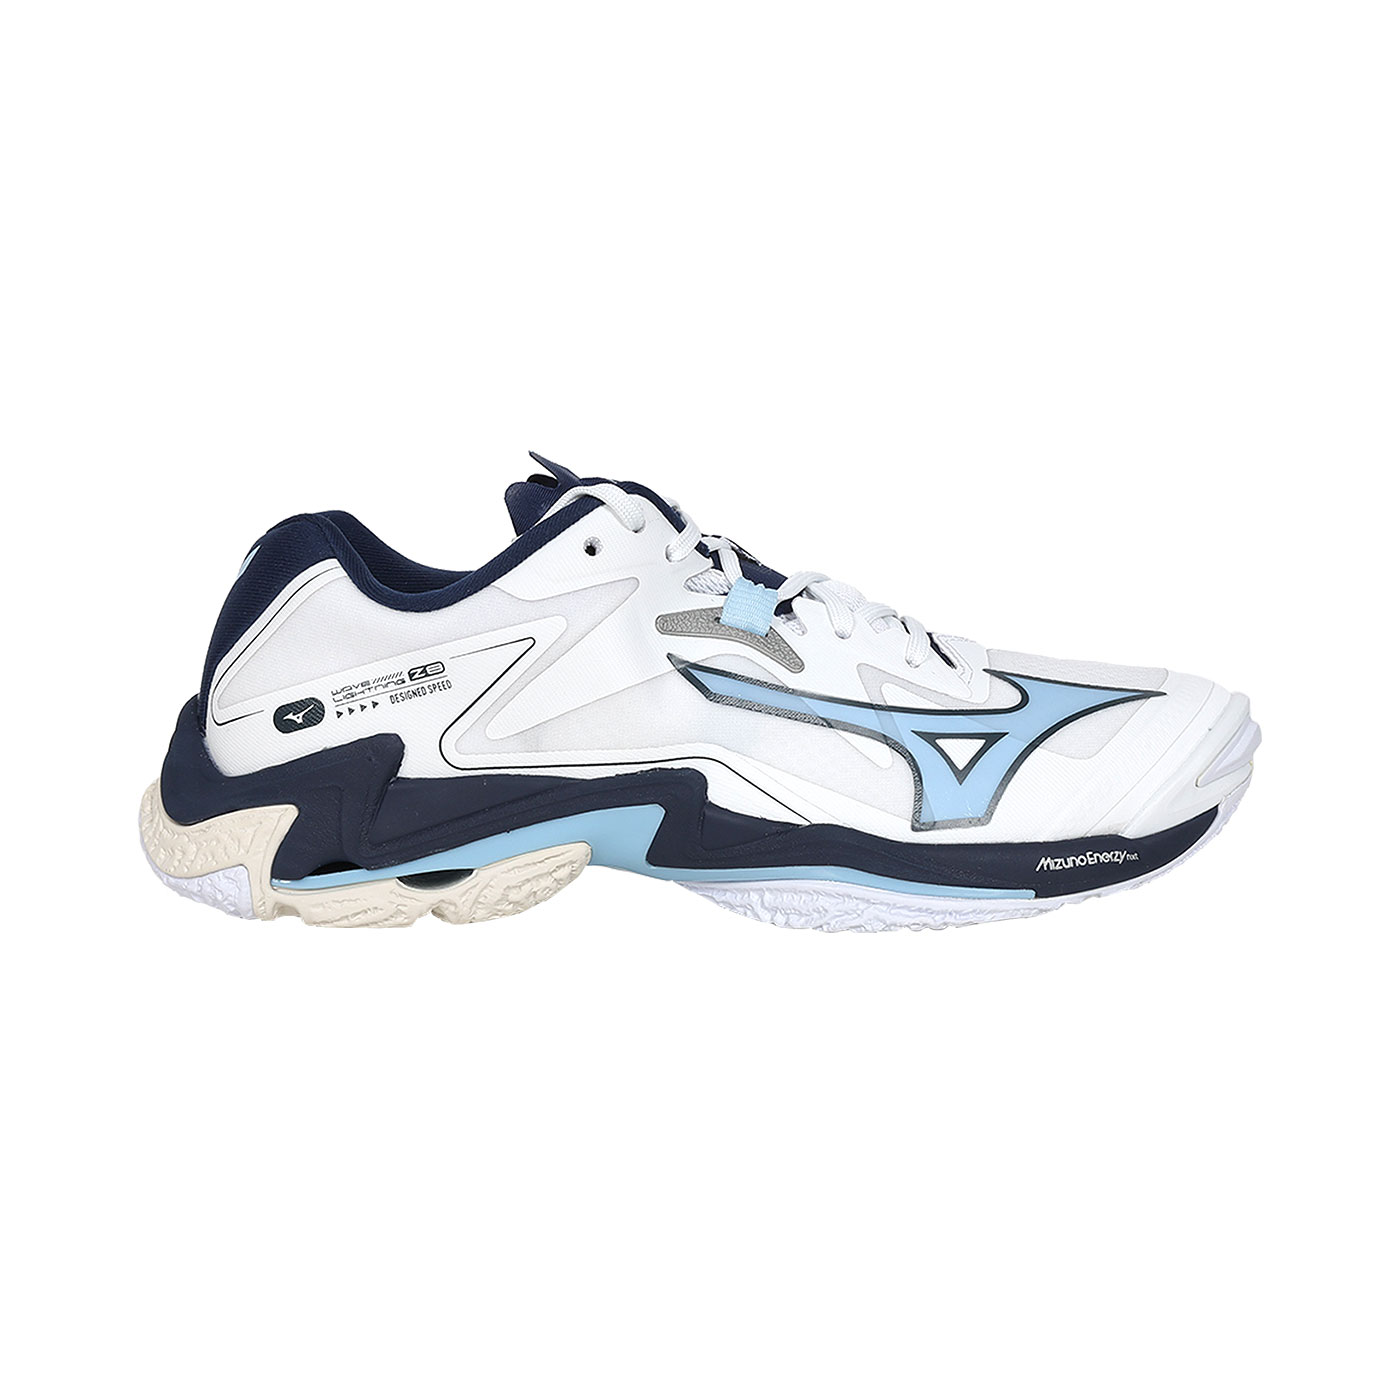 MIZUNO 男款排球鞋  @WAVE LIGHTNING Z8@ V1GA240053 - 白深藍淺藍